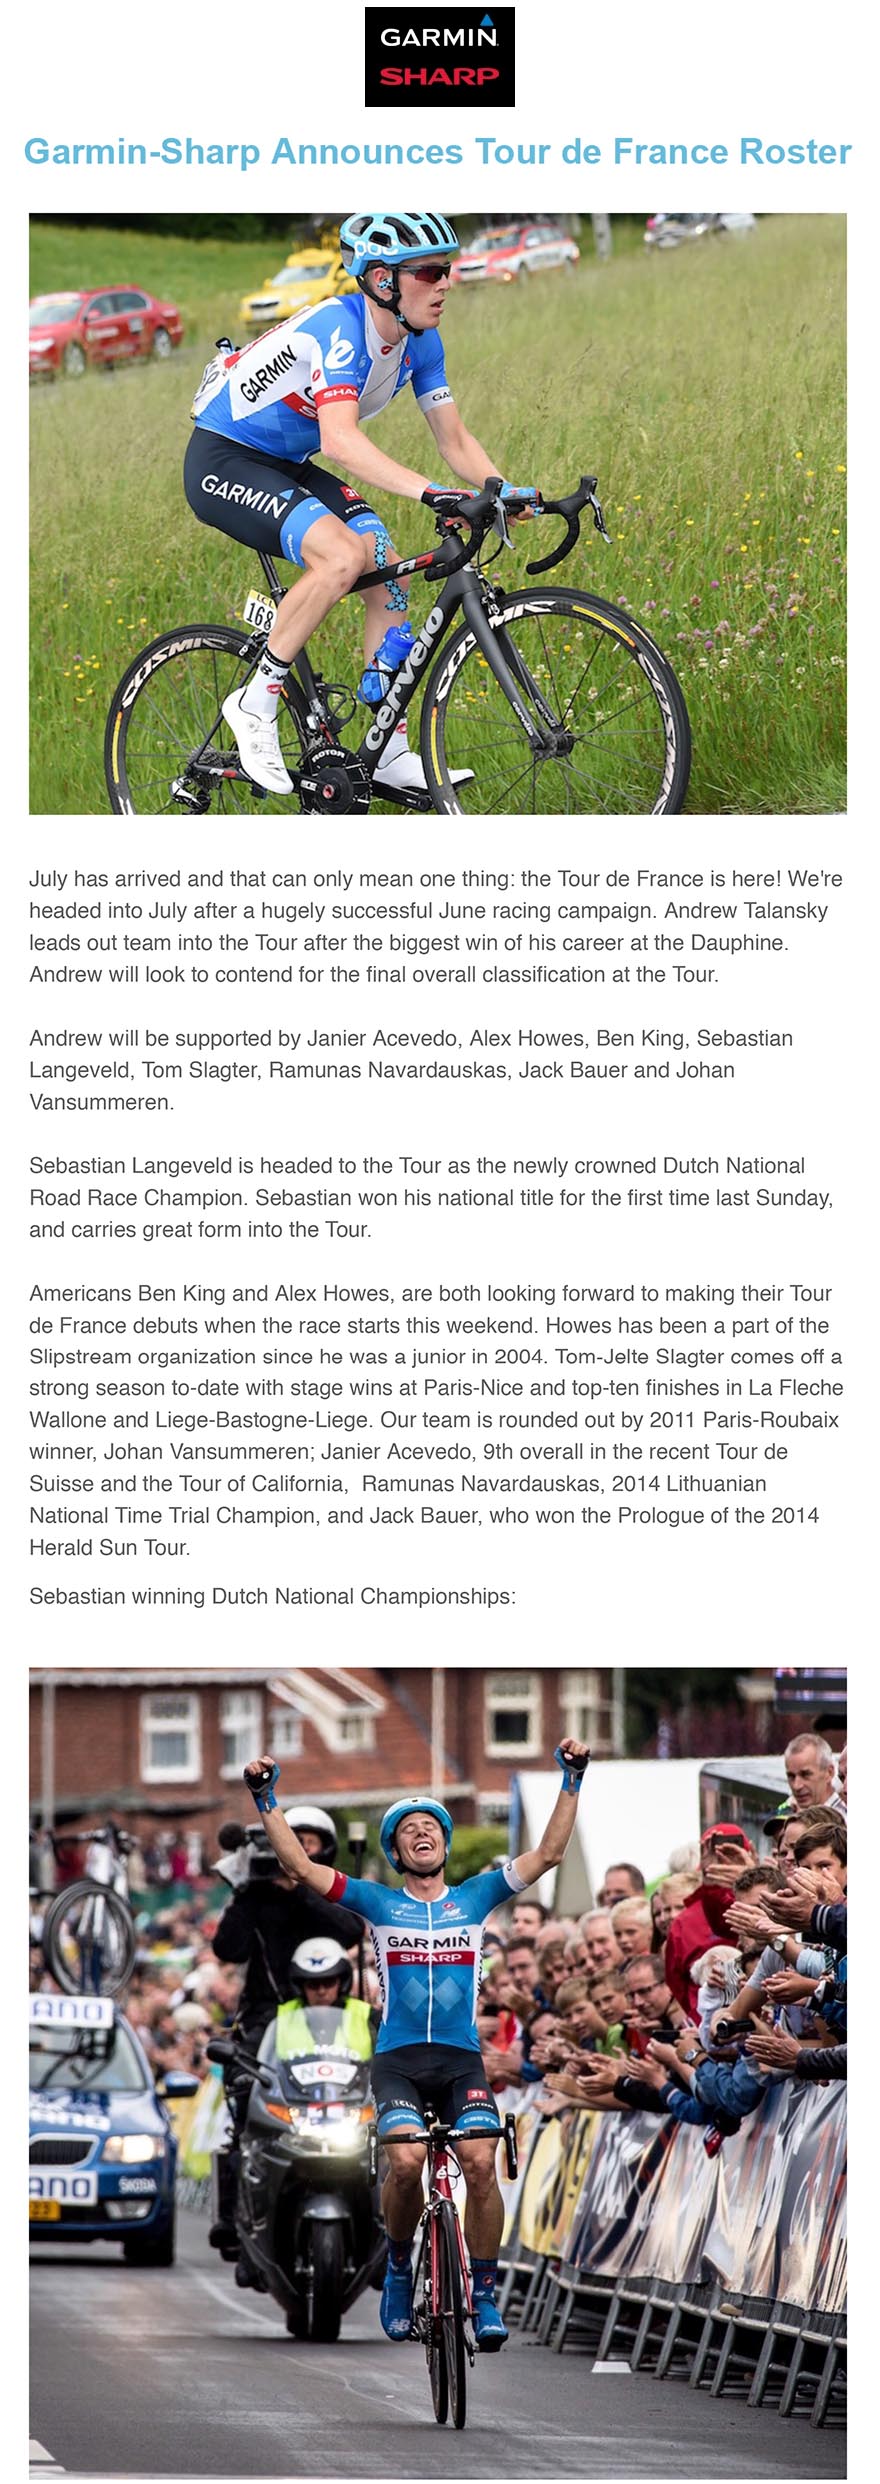 TEAM GARMIN SHARP Tour de France Roster